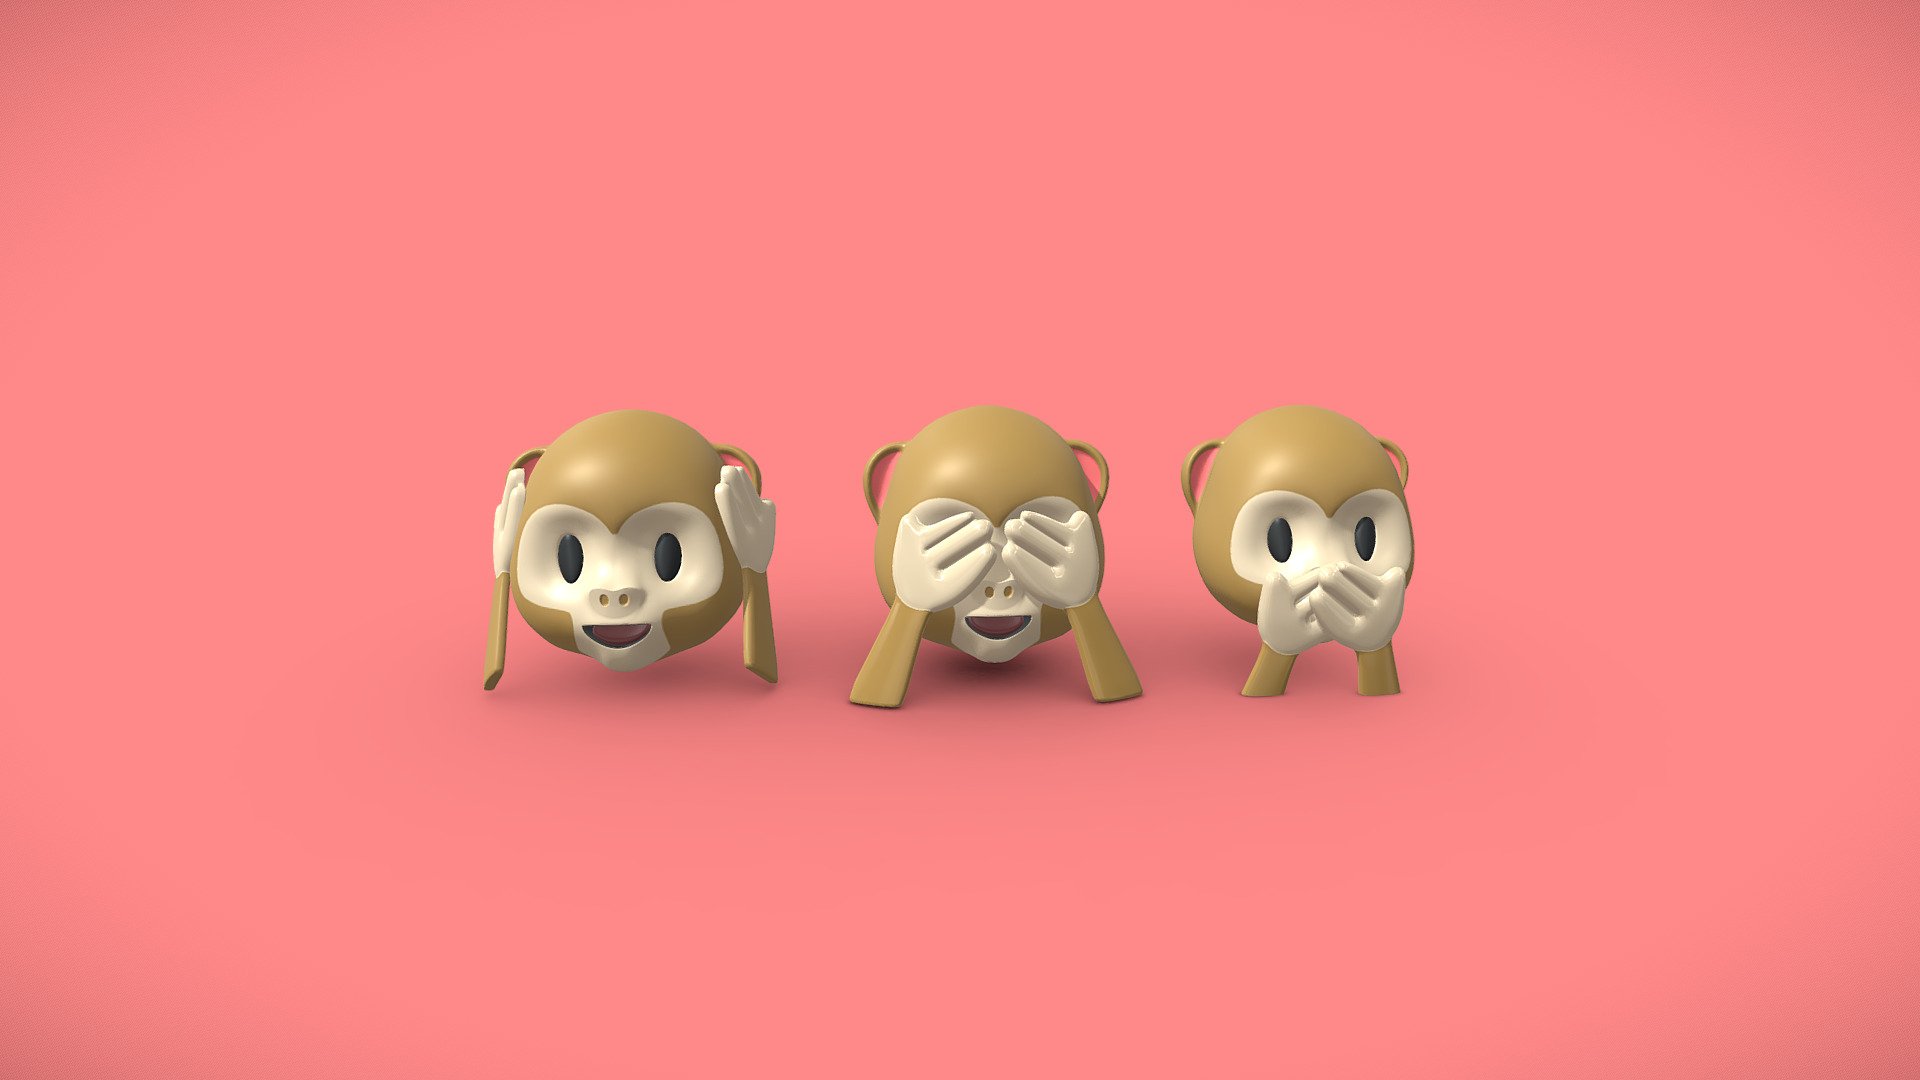 Introducing the Three Wise Monkeys 3D model collection featuring Kikazaru, Mizaru, and Iwazaru, the iconic symbols of the &ldquo;See No Evil, Hear No Evil, Speak No Evil